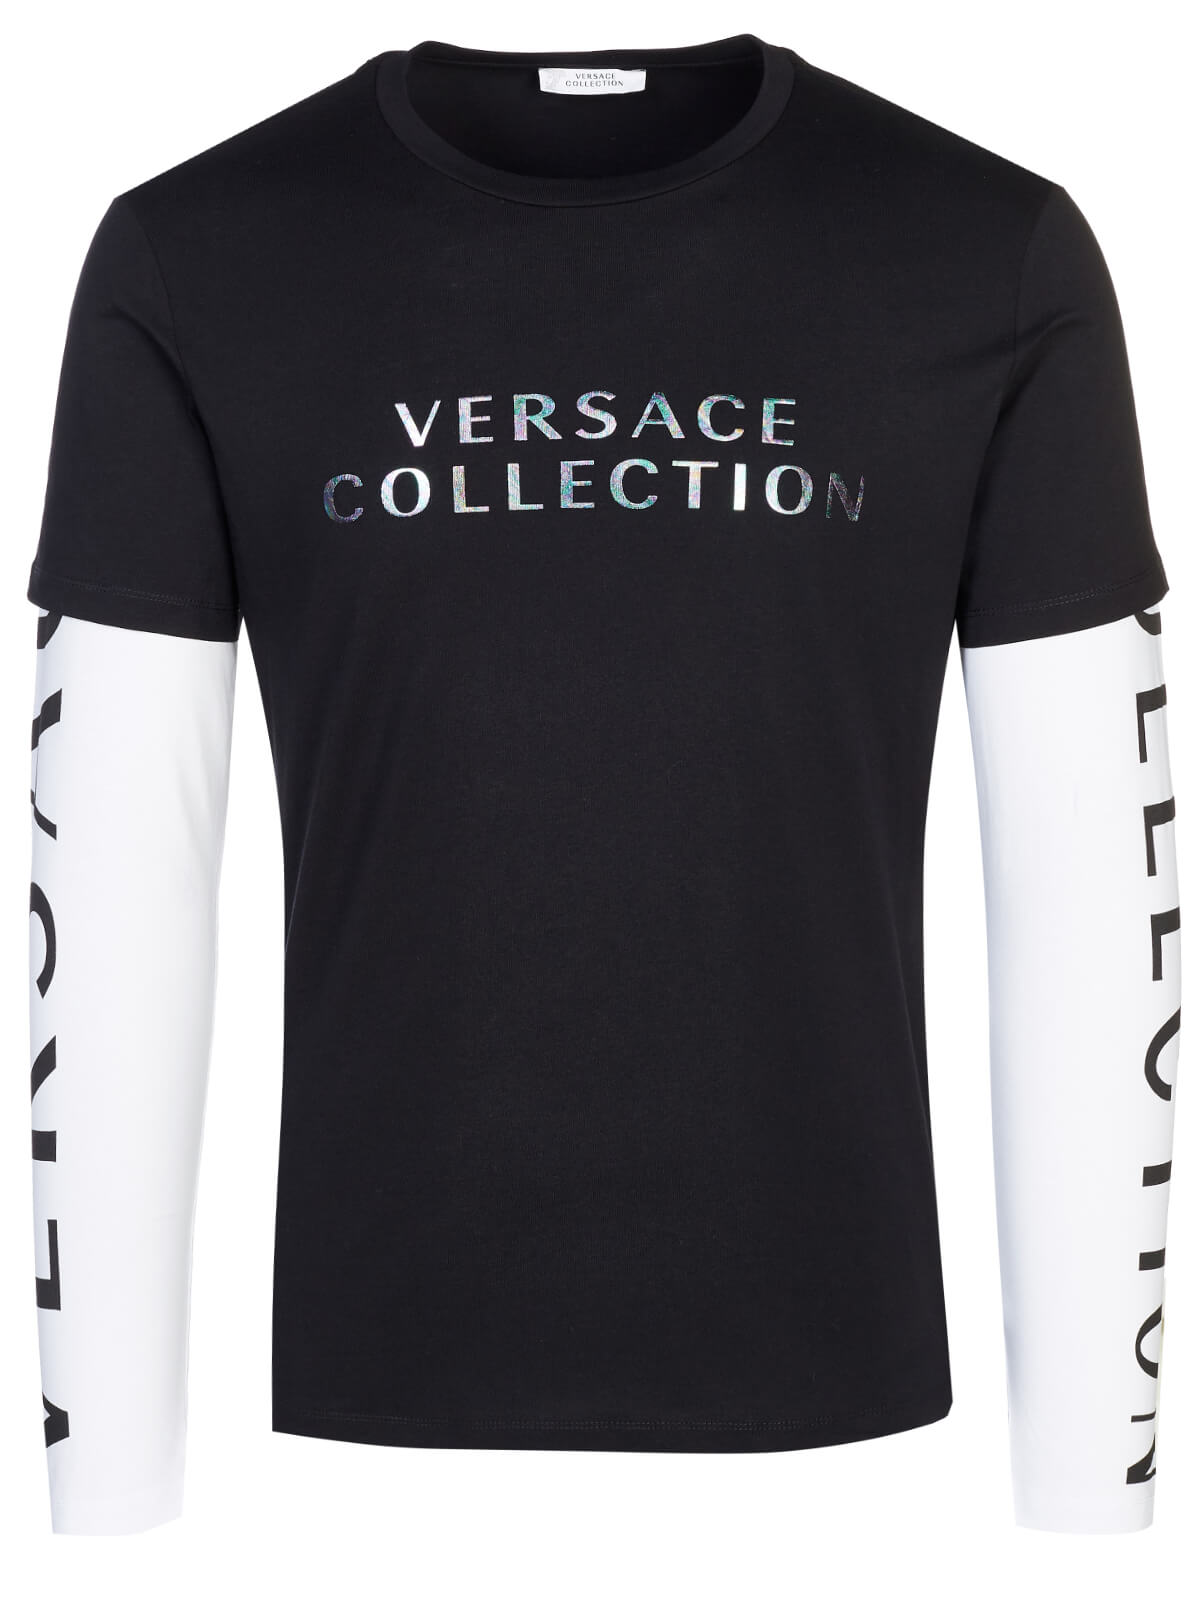 versace long sleeve